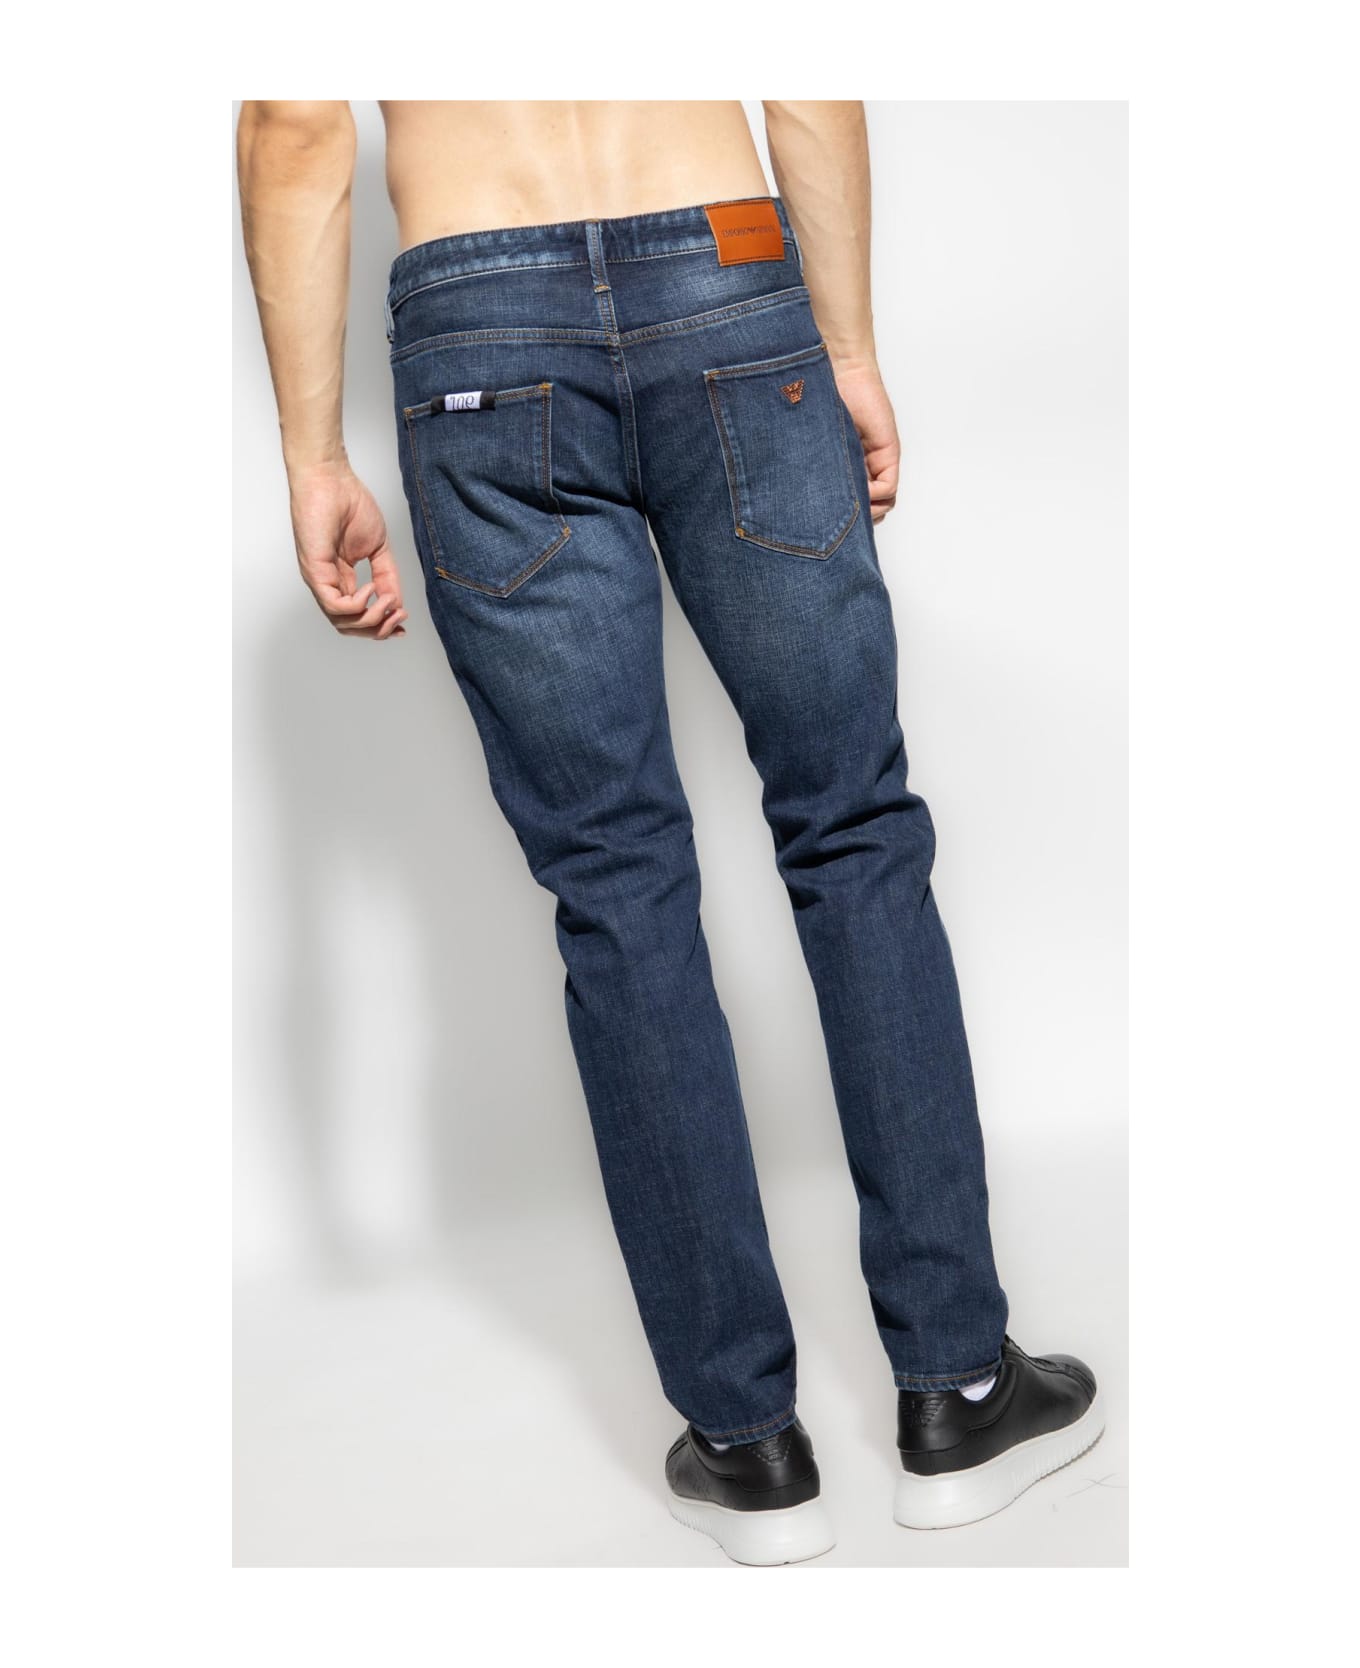 Emporio Armani 'j06' Slim Fit Jeans - Denim blu